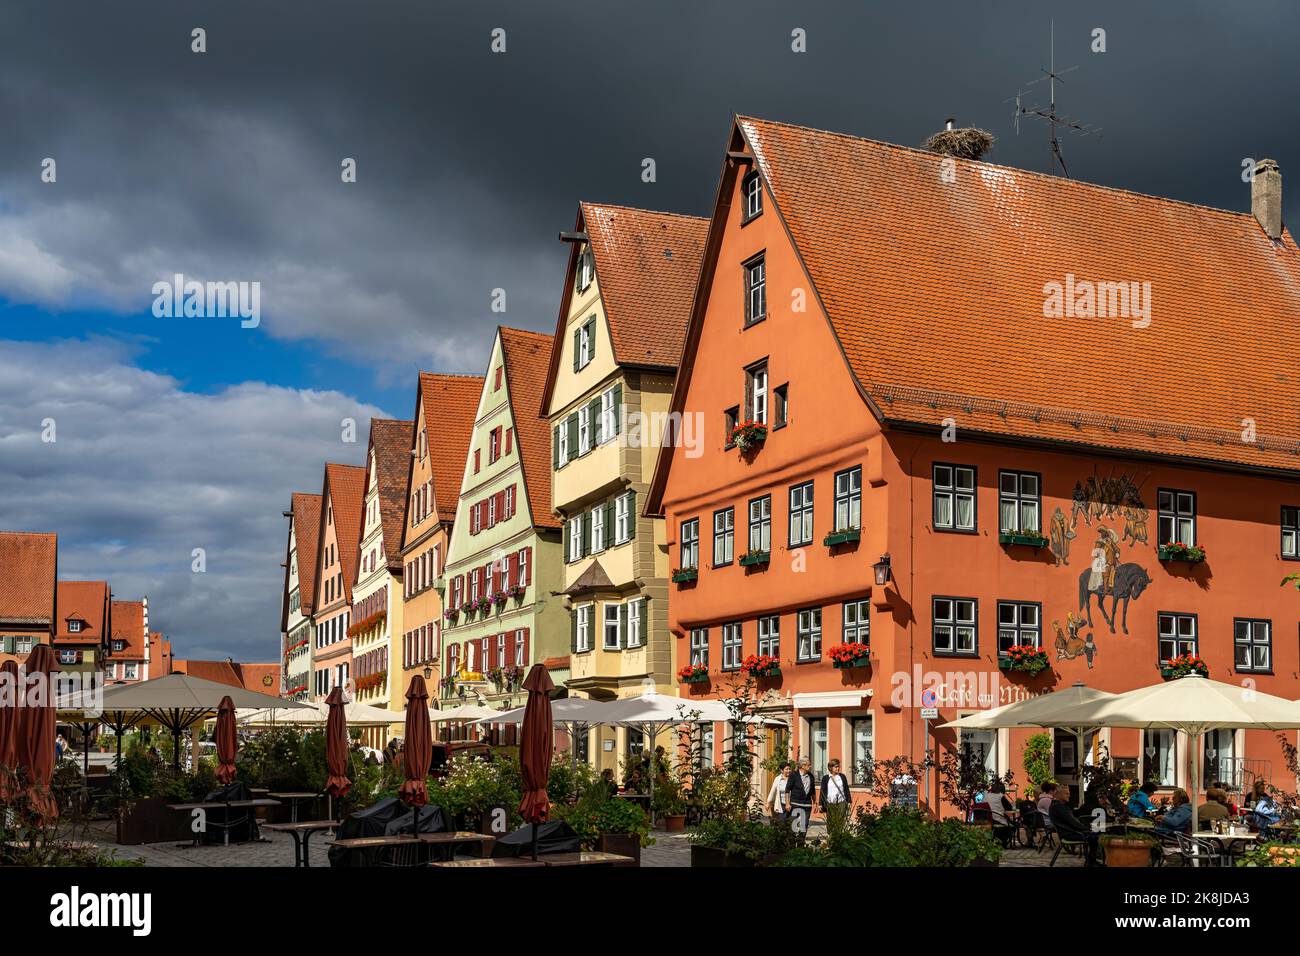 Die Altstadt in  Dinkelsbühl, Mittelfranken, Bayern, Deutschland  |  The Old Town in Dinkelsbühl, Middle Franconia, Bavaria, Germany, Europe Stock Photo